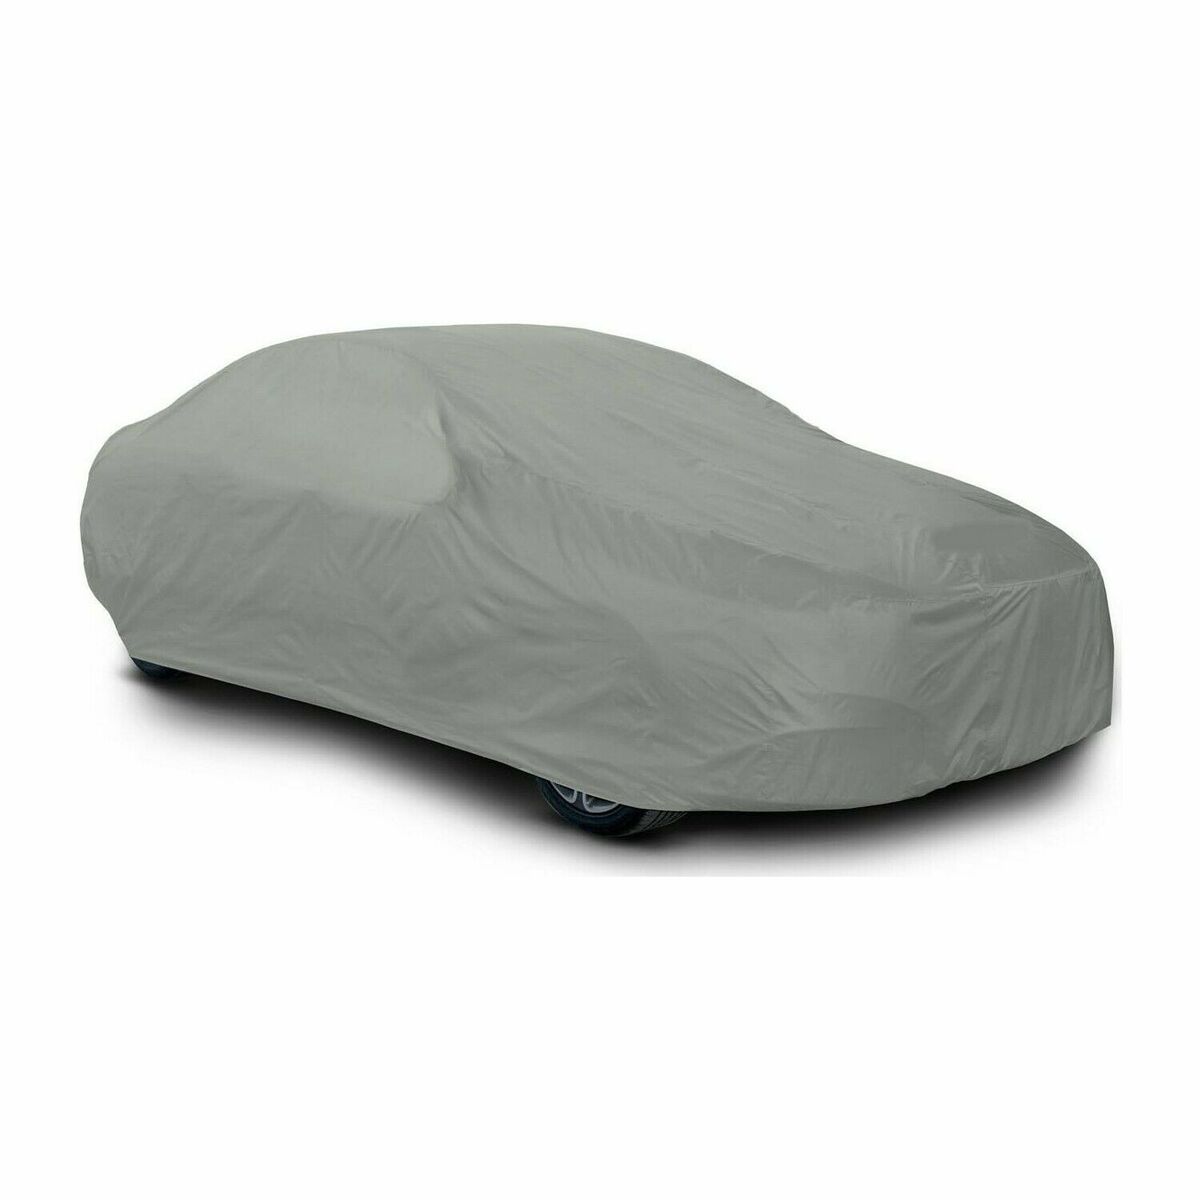 Paspas Merkezi Premium Peugeot 208 Car Tarpaulin Auto Cover Tent